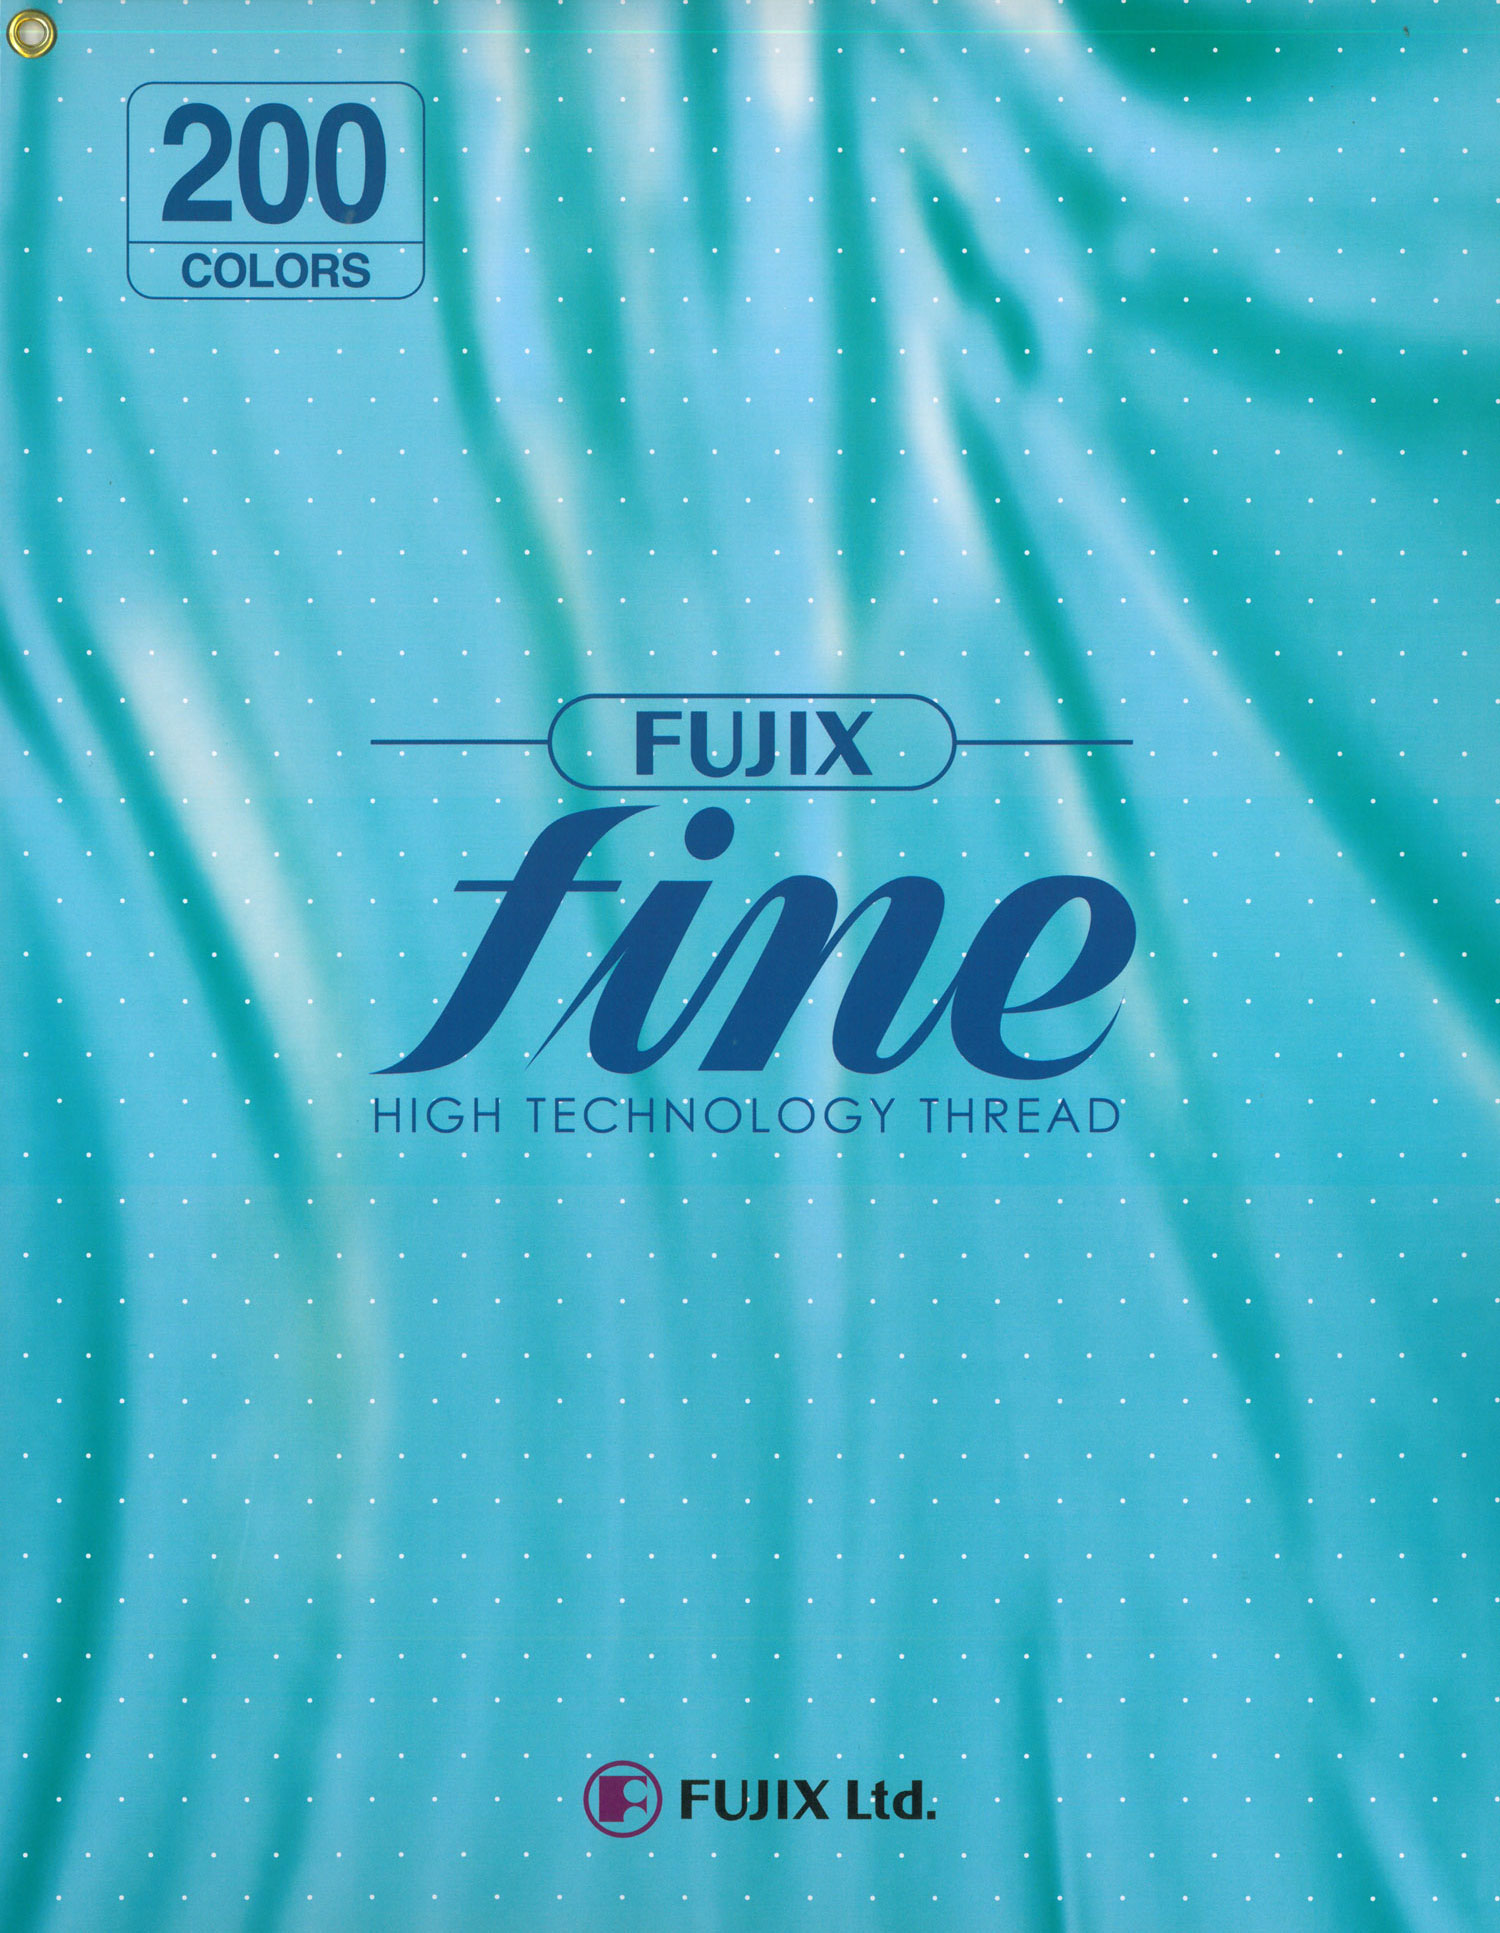 FUJIX-SAMPLE-11 Fine HIGHT TECHNOLOGY THREAD[Sample Card] FUJIX